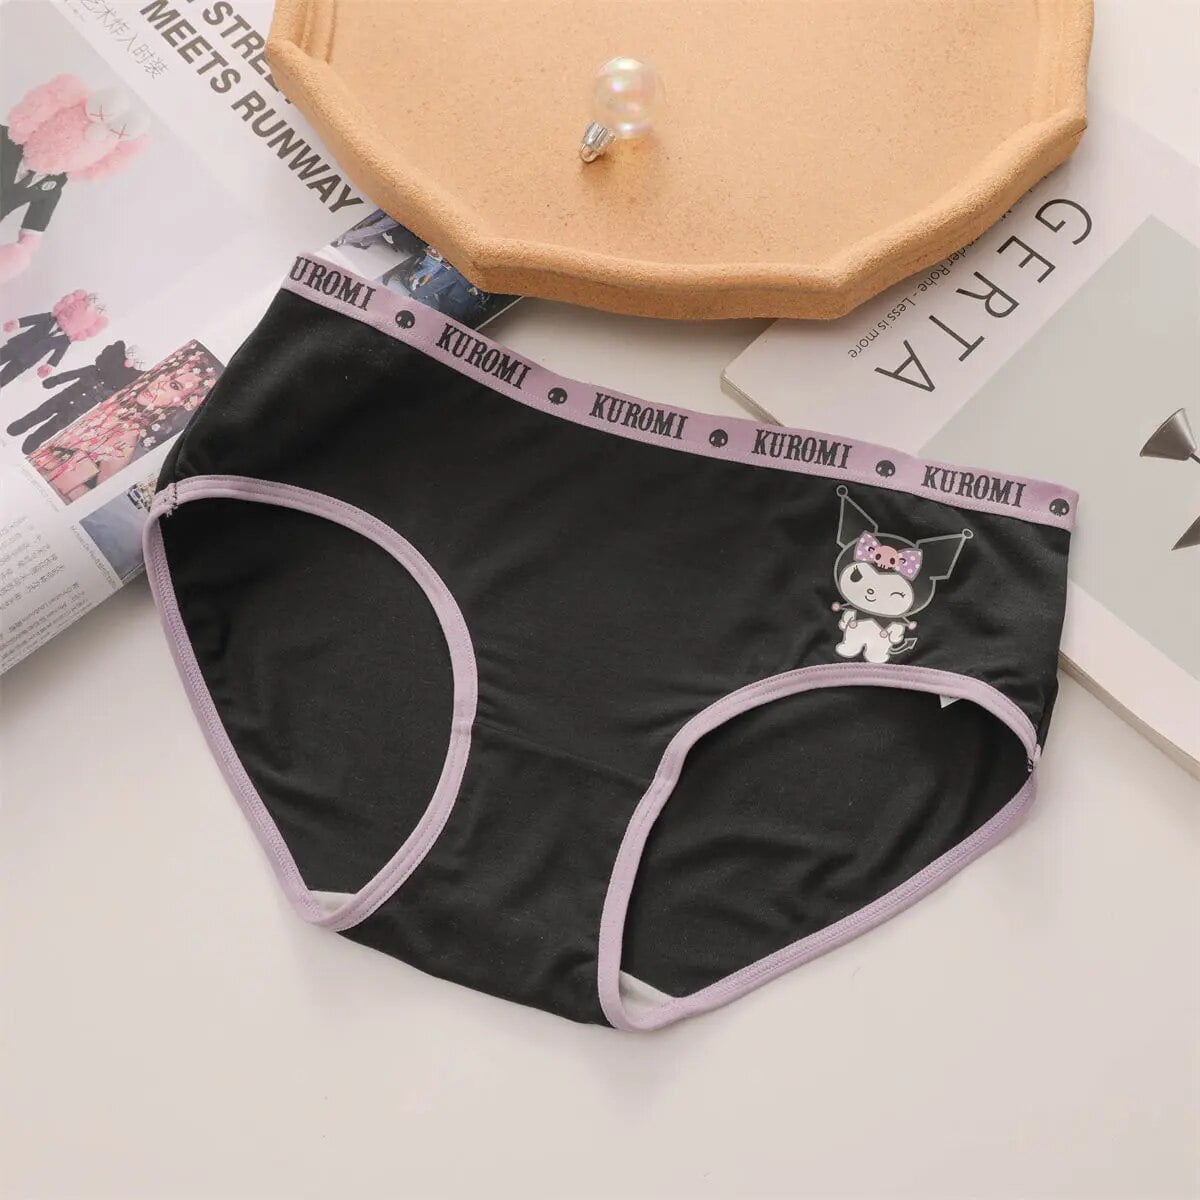 Sanrios Women Sport Panties Underwear Cute Anime Kuromi